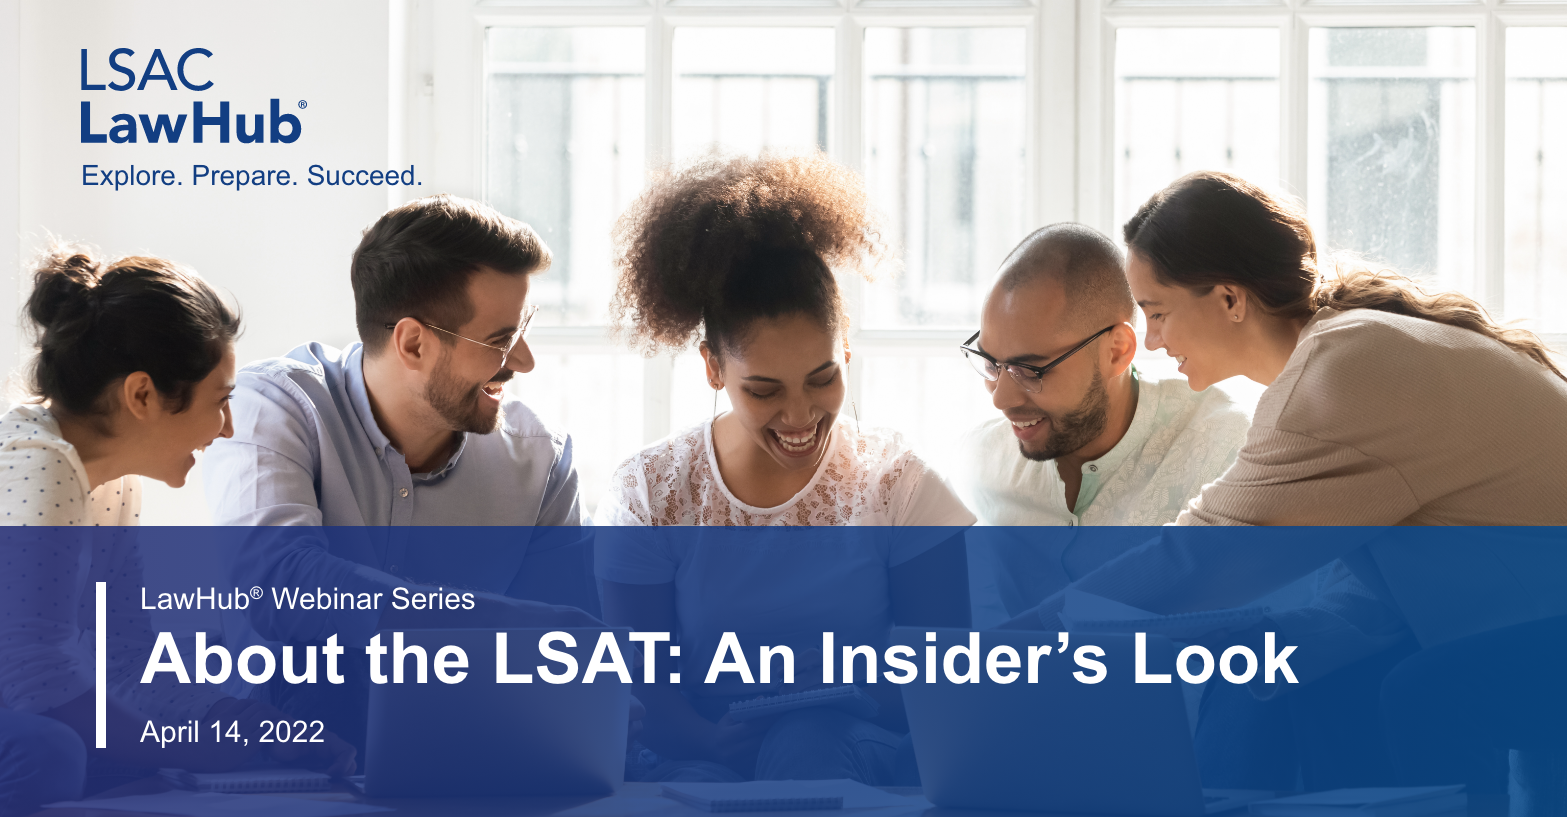 LSAC LawHub Webinar Series - About the LSAT: An Insider's Look